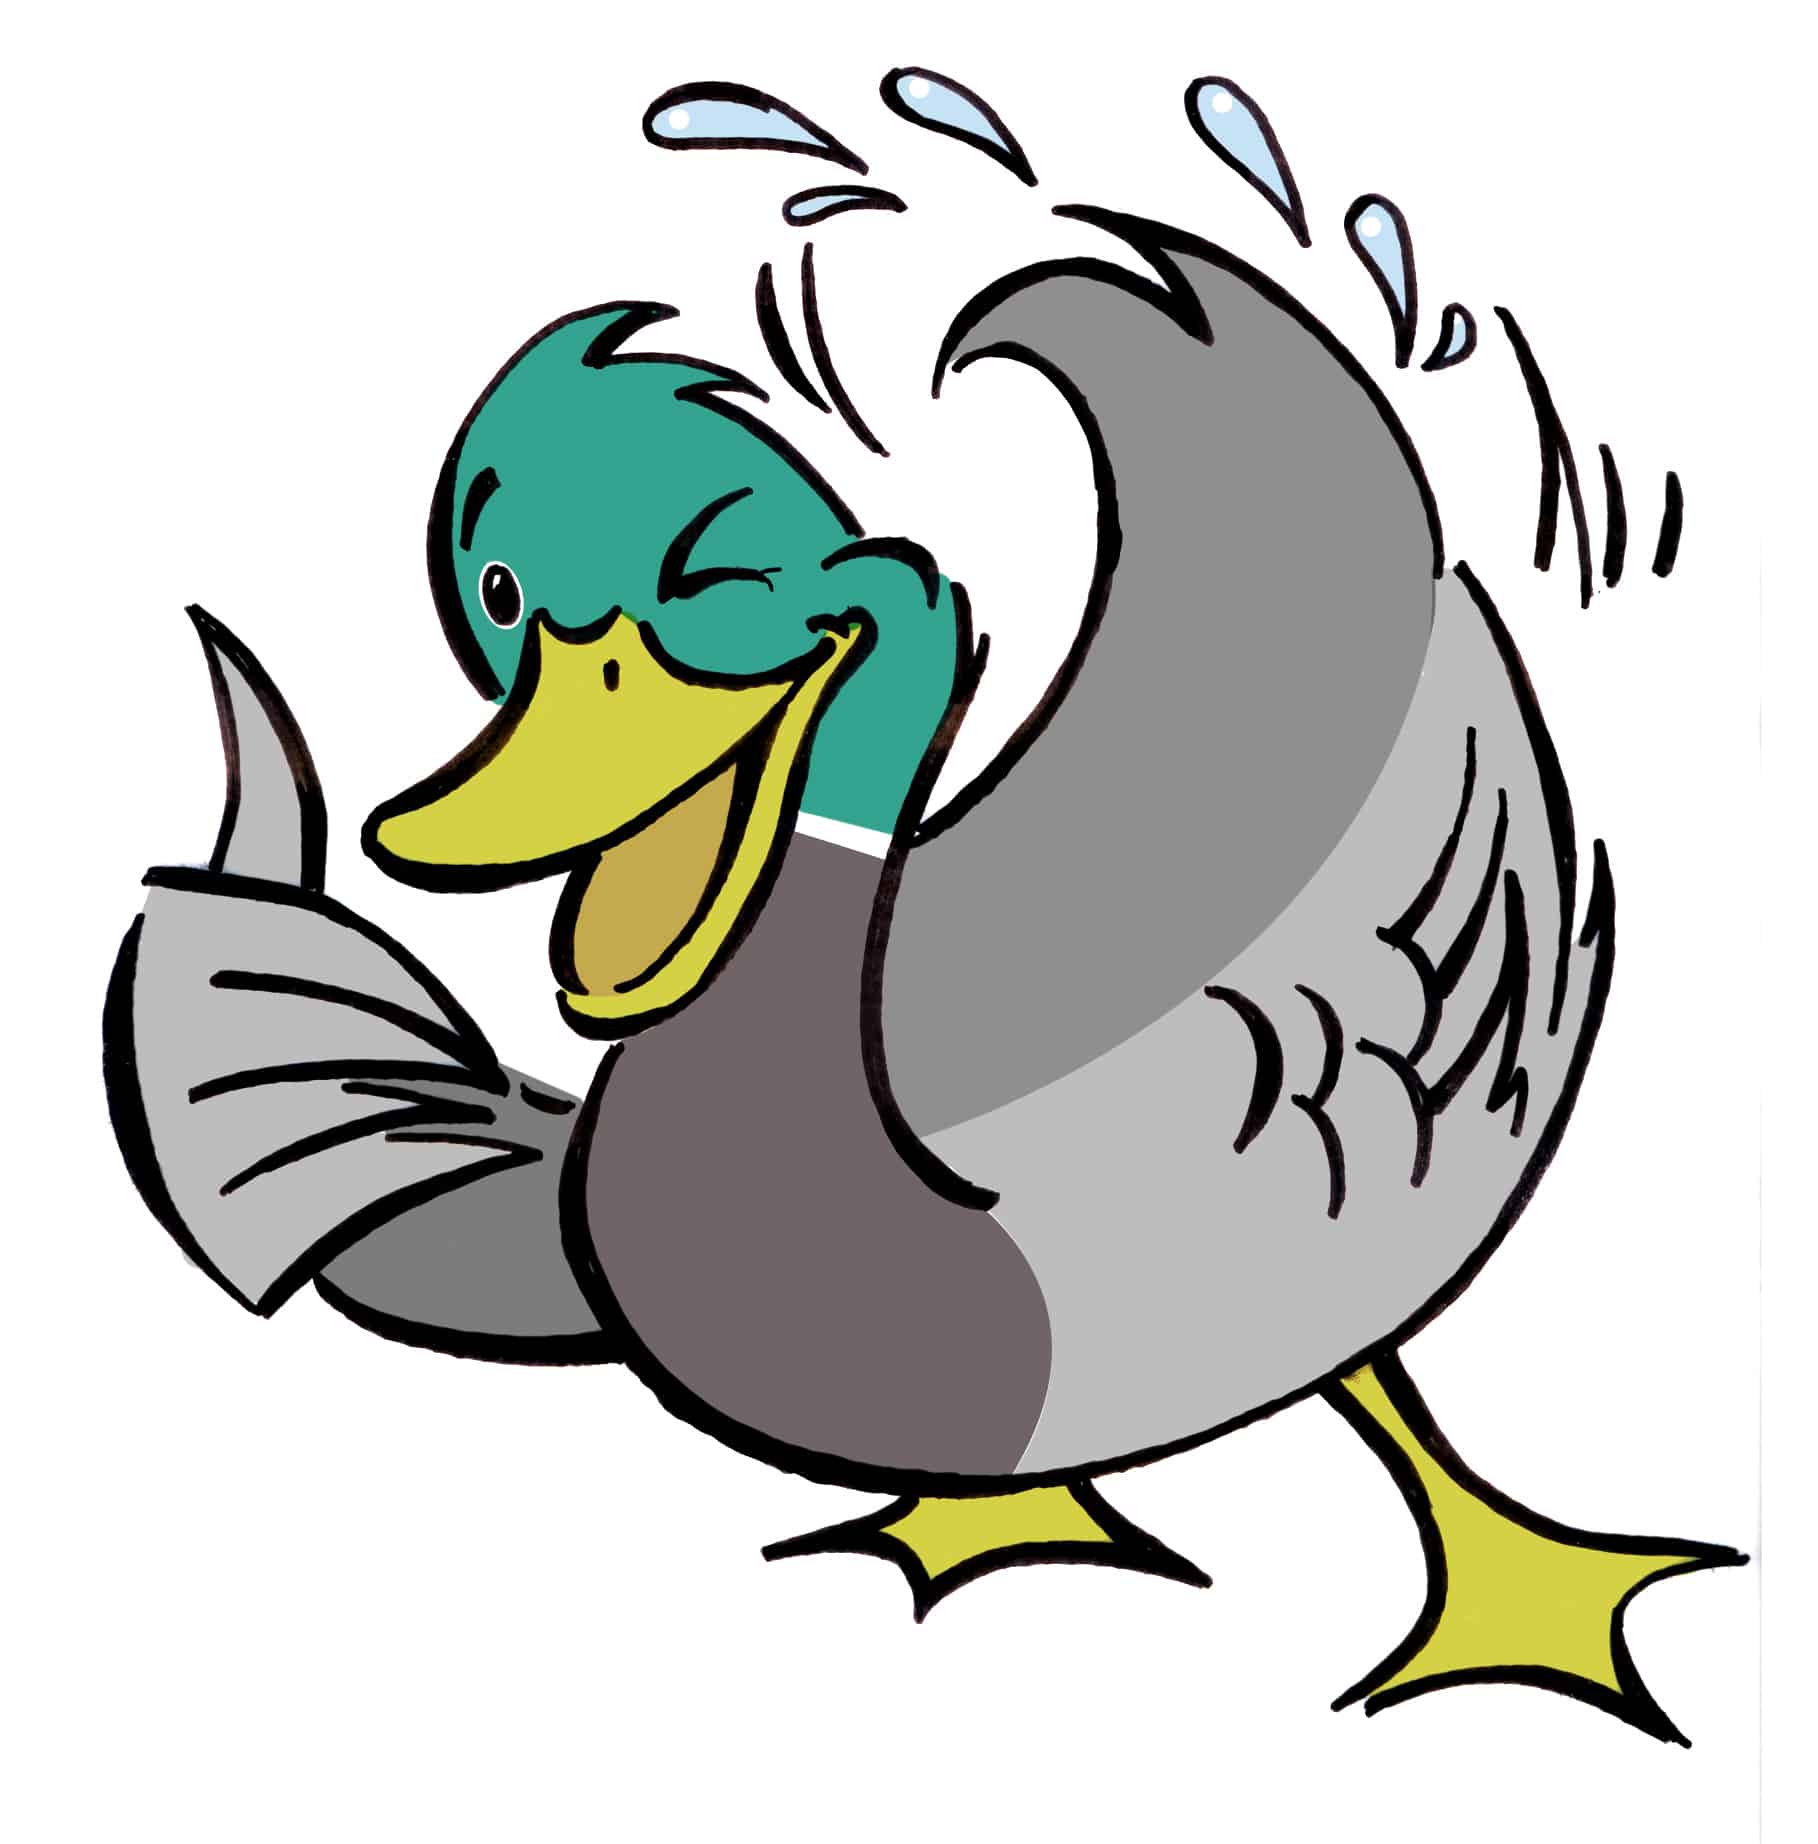 Seymour the Duck logo